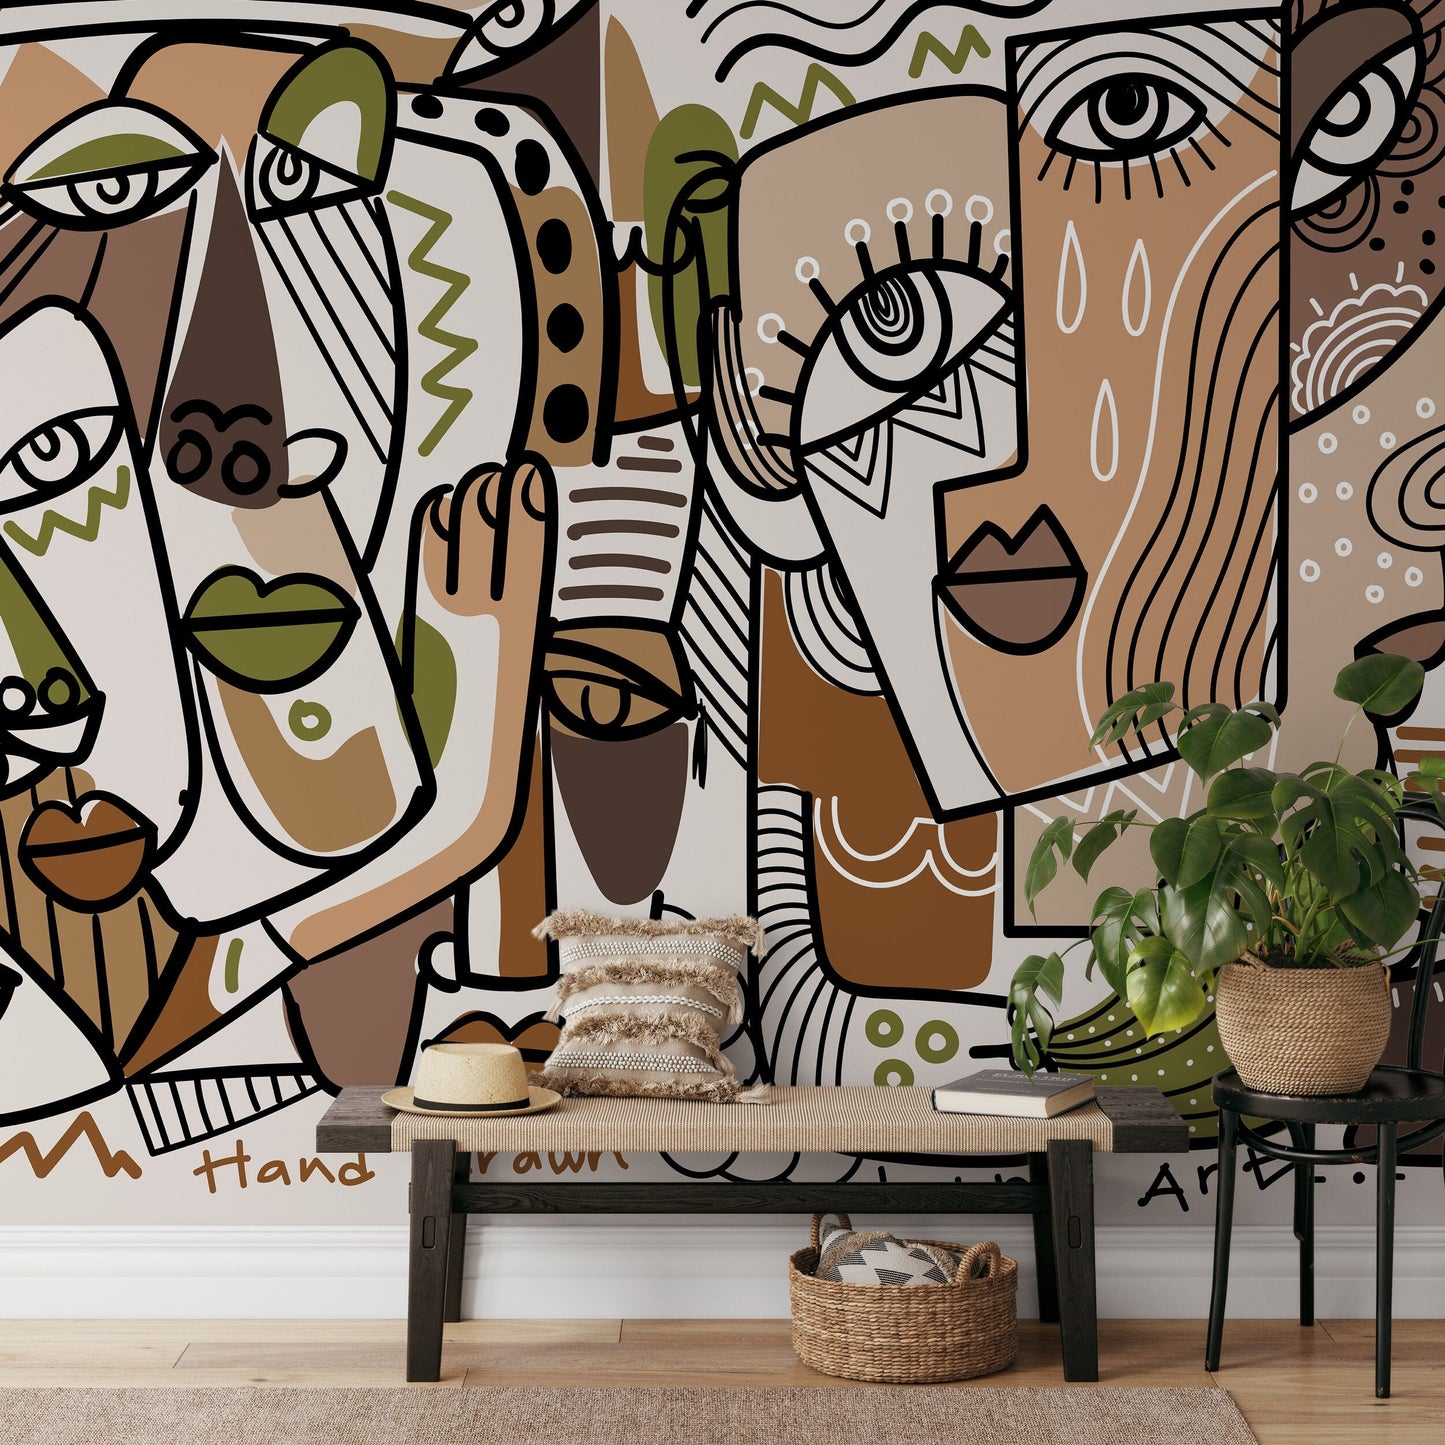 Abstract Mural Line Art Faces Wallpaper Modern Wallpaper Hand Drawing Wallpaper Peel and Stick Wallpaper Home Decor - D581